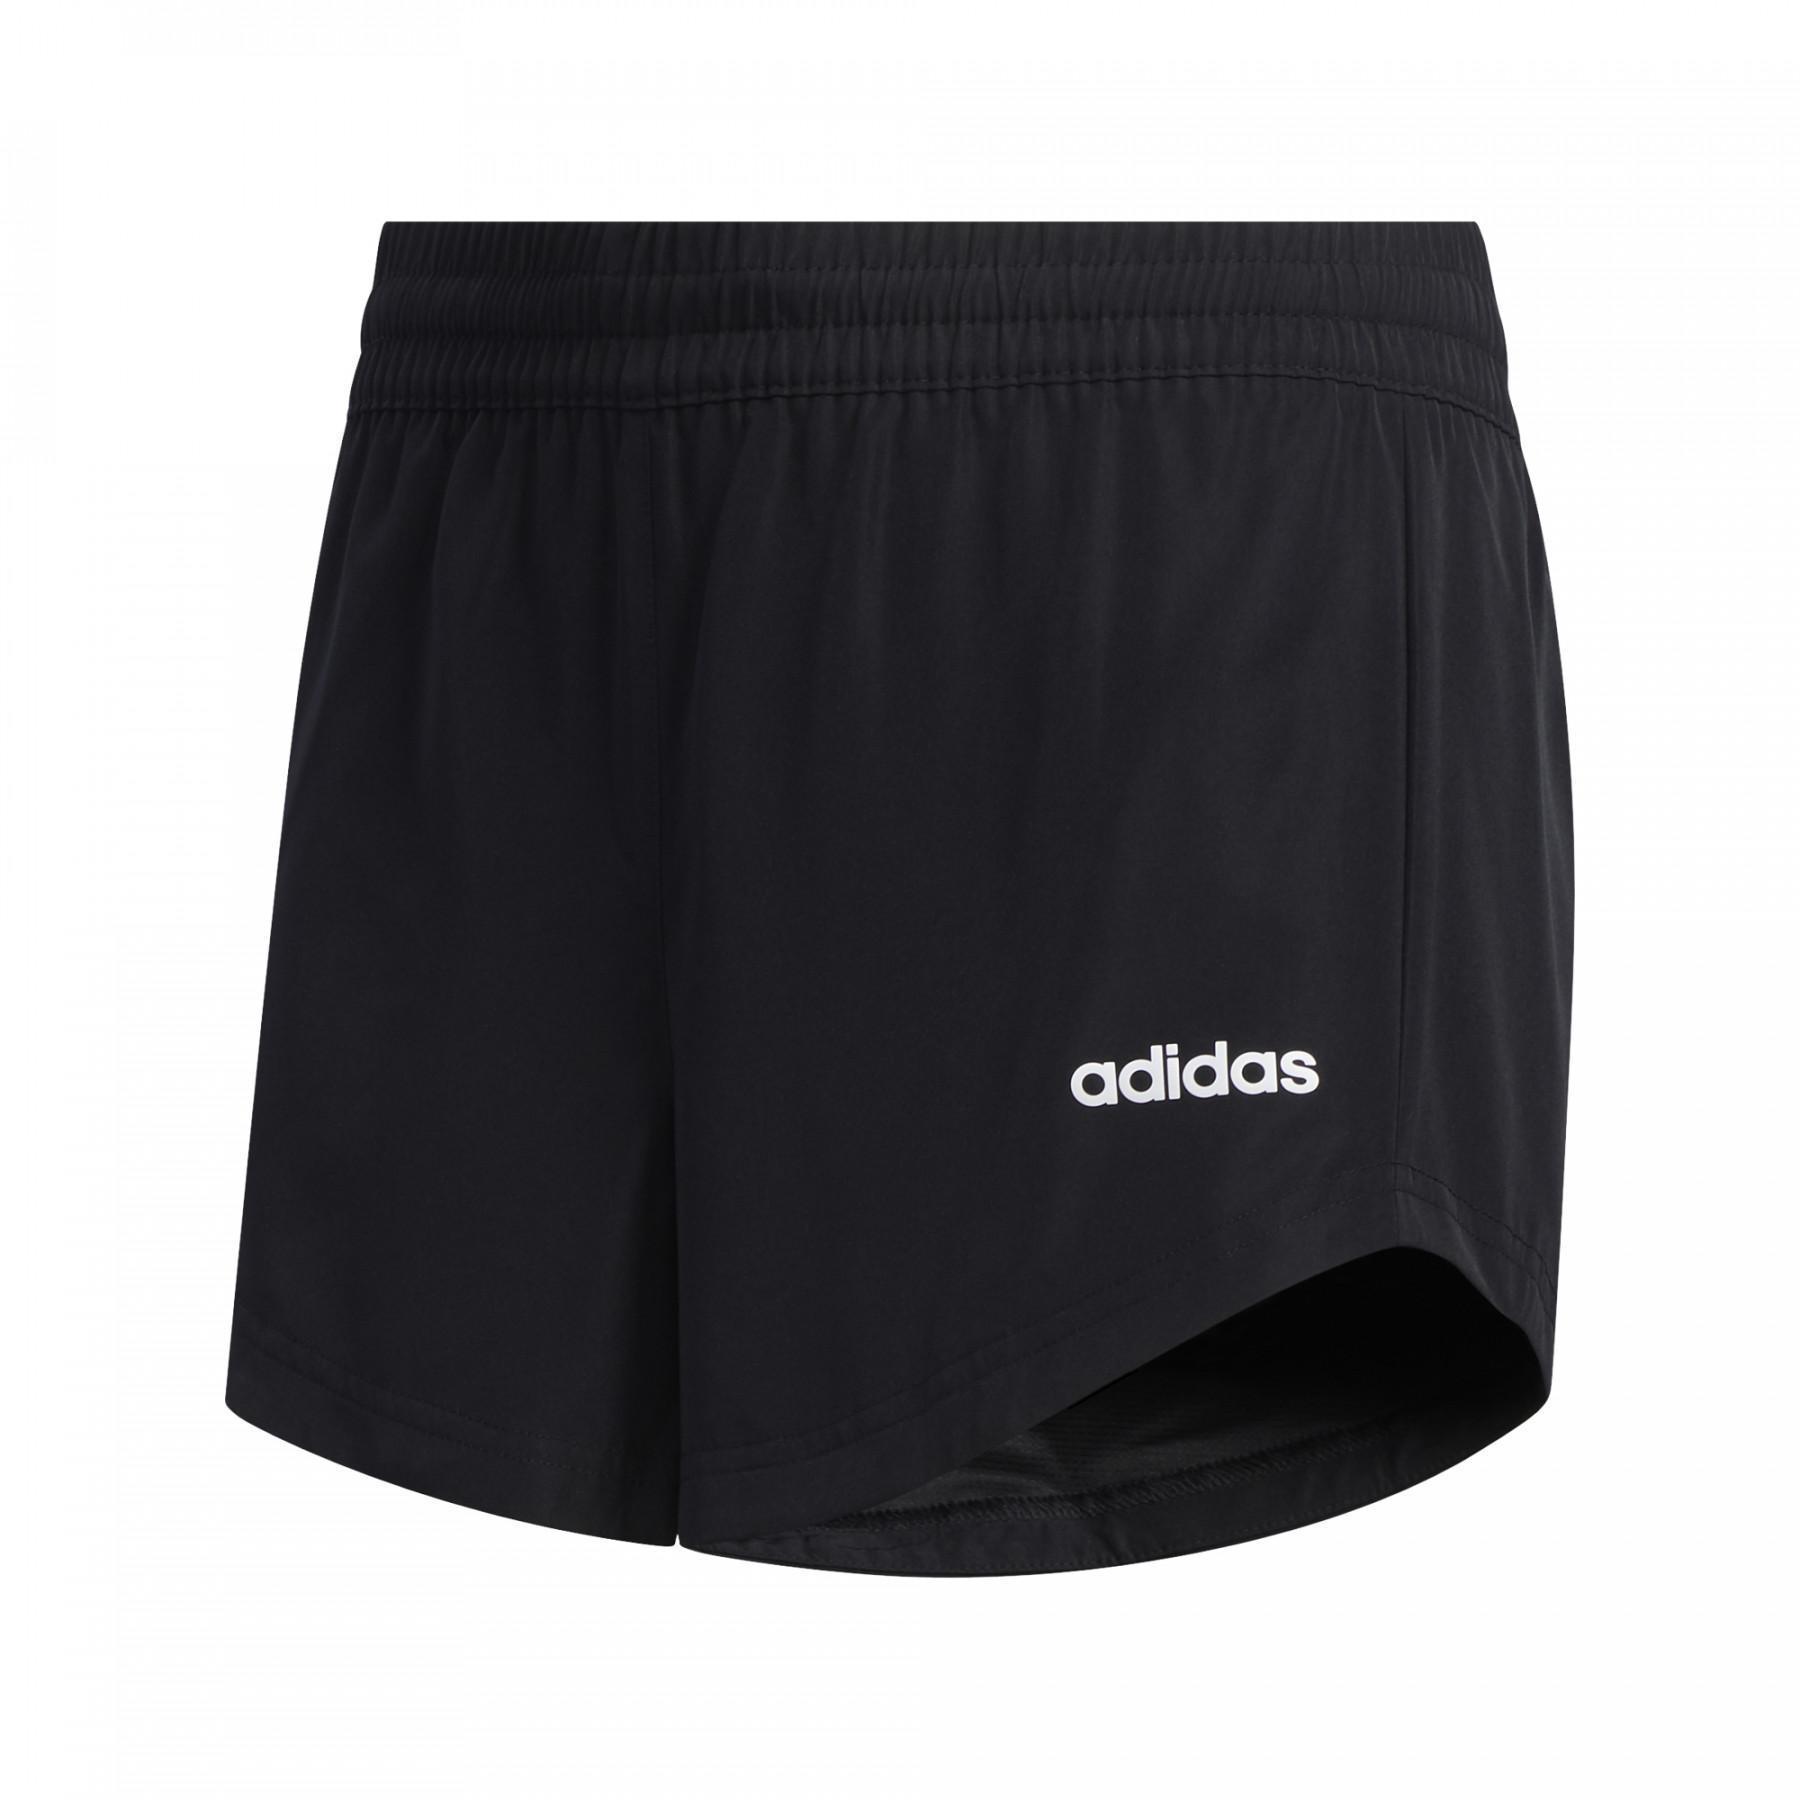 Children's shorts adidas Basic